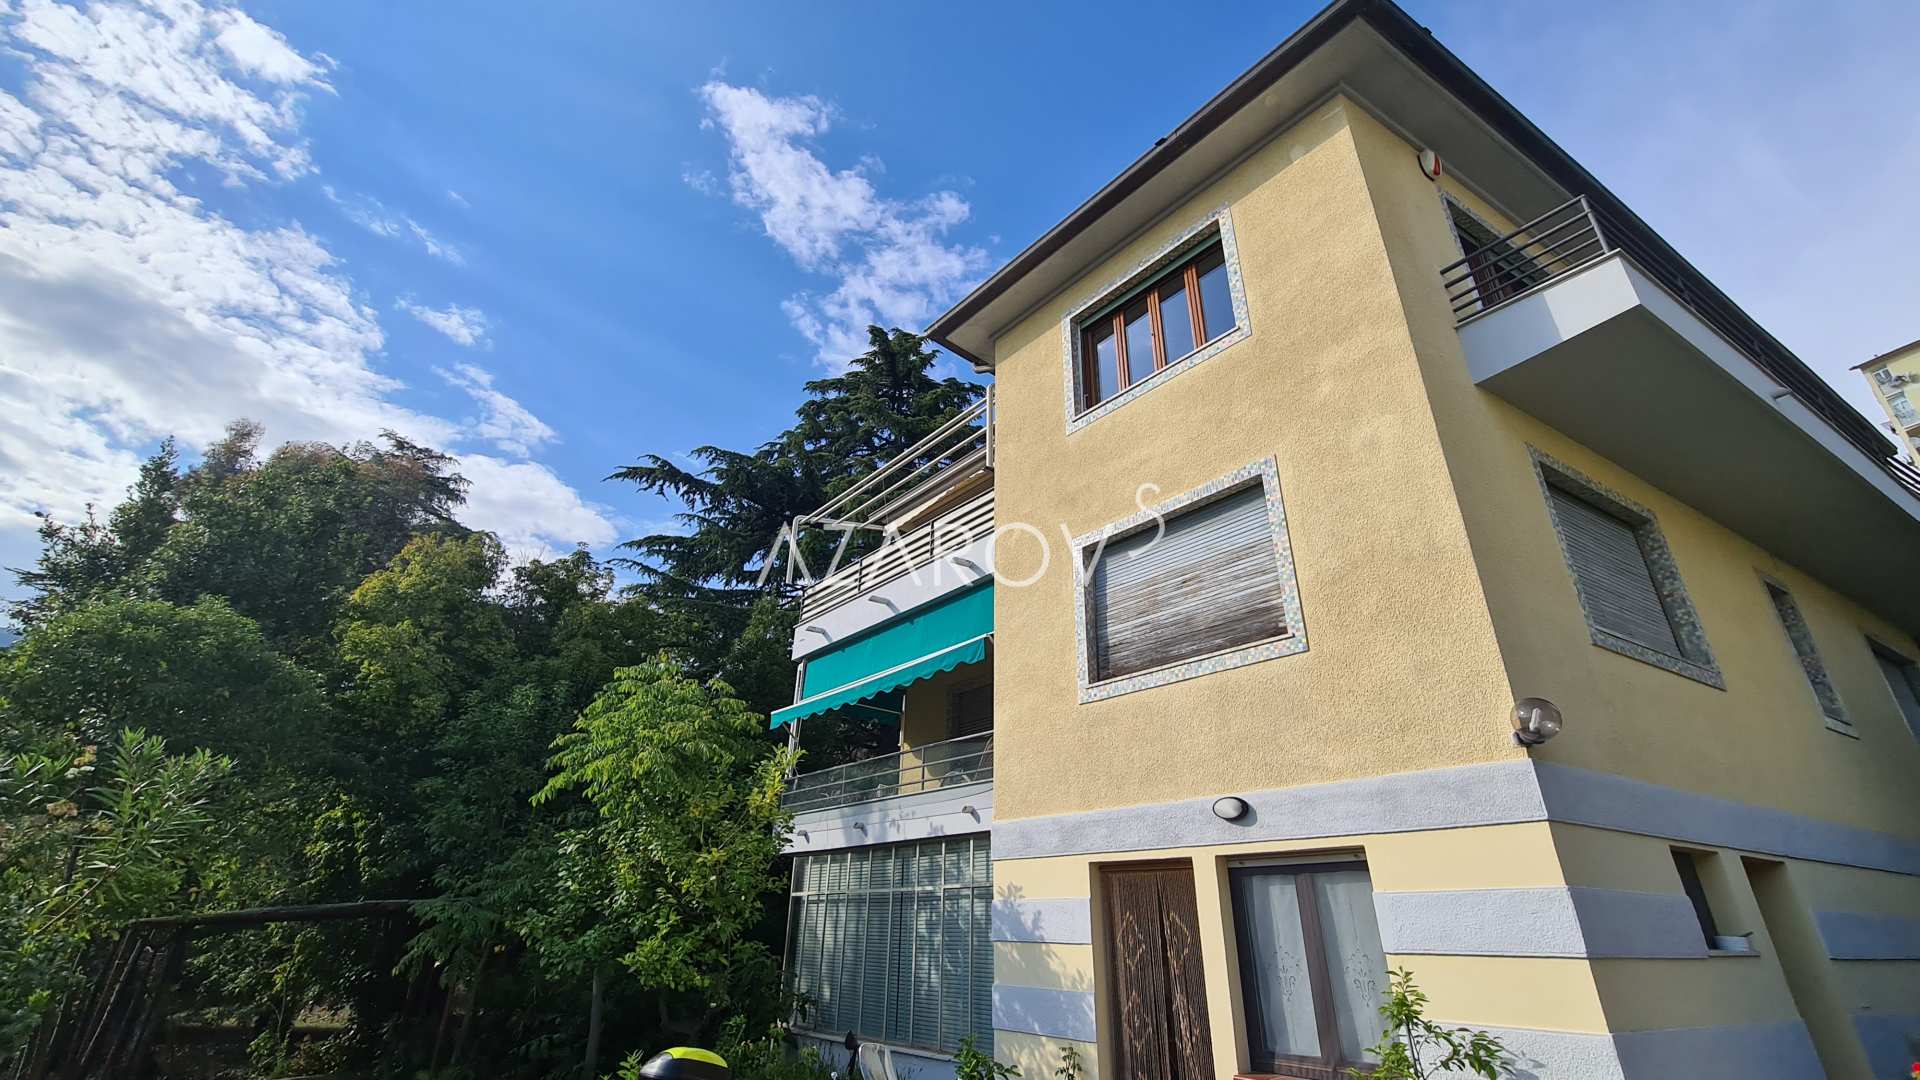 Vendita Casa bifamiliare a Sanremo